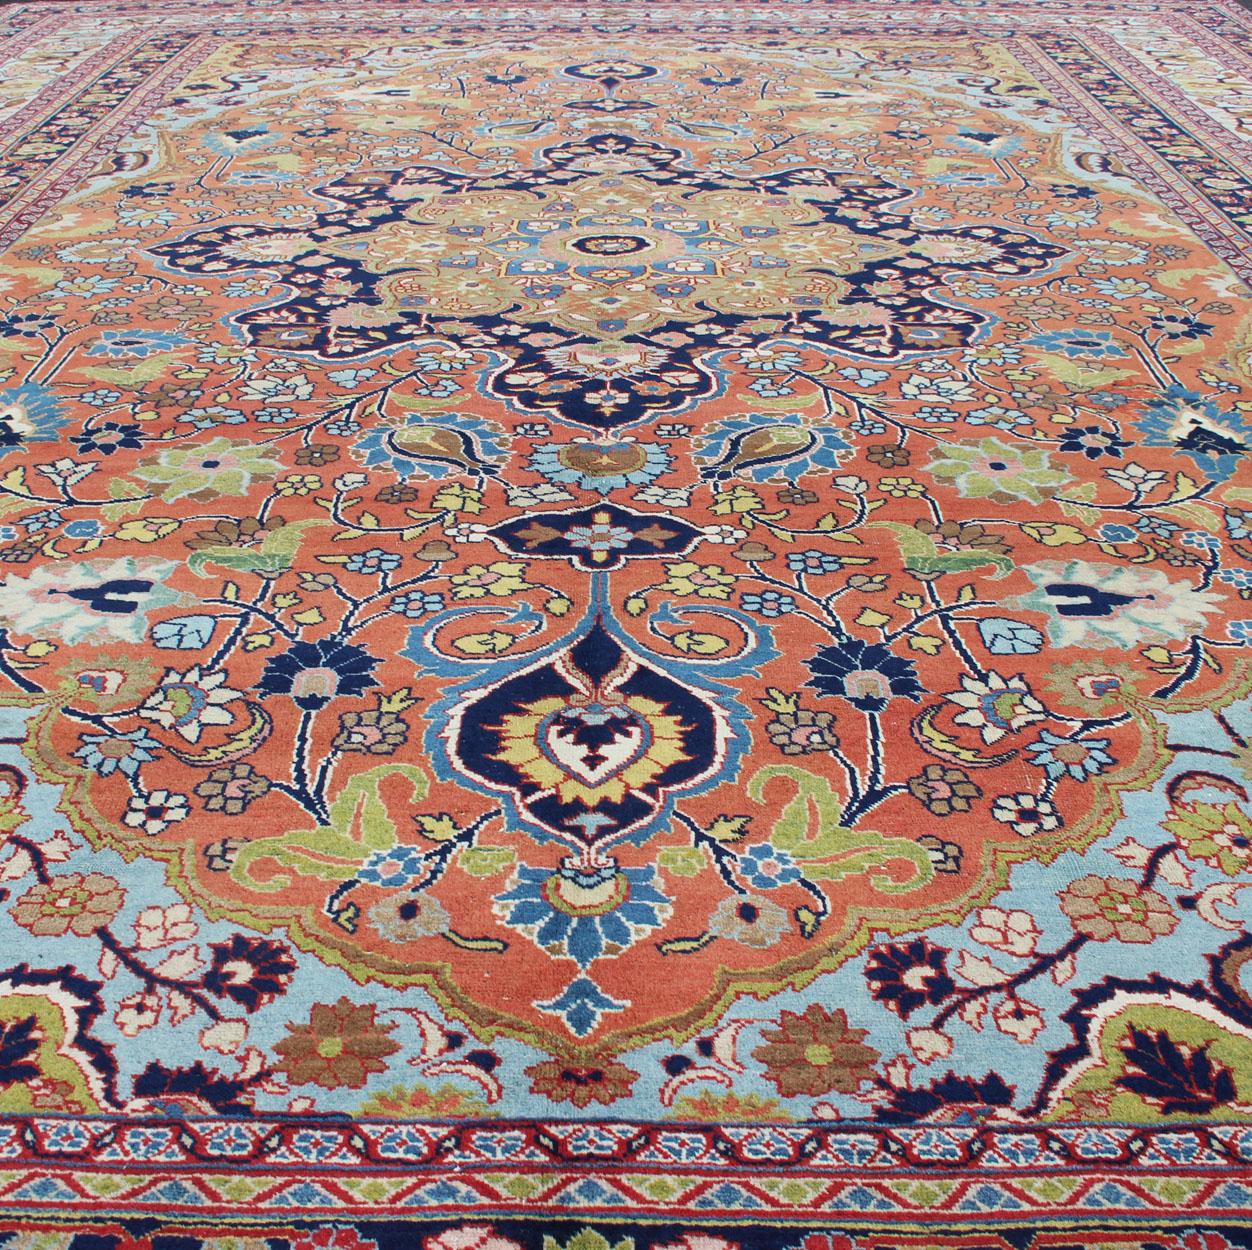 Antique Fine Persian Classic Design Tabriz Rug in Orange, Blue & Multi Colors For Sale 10